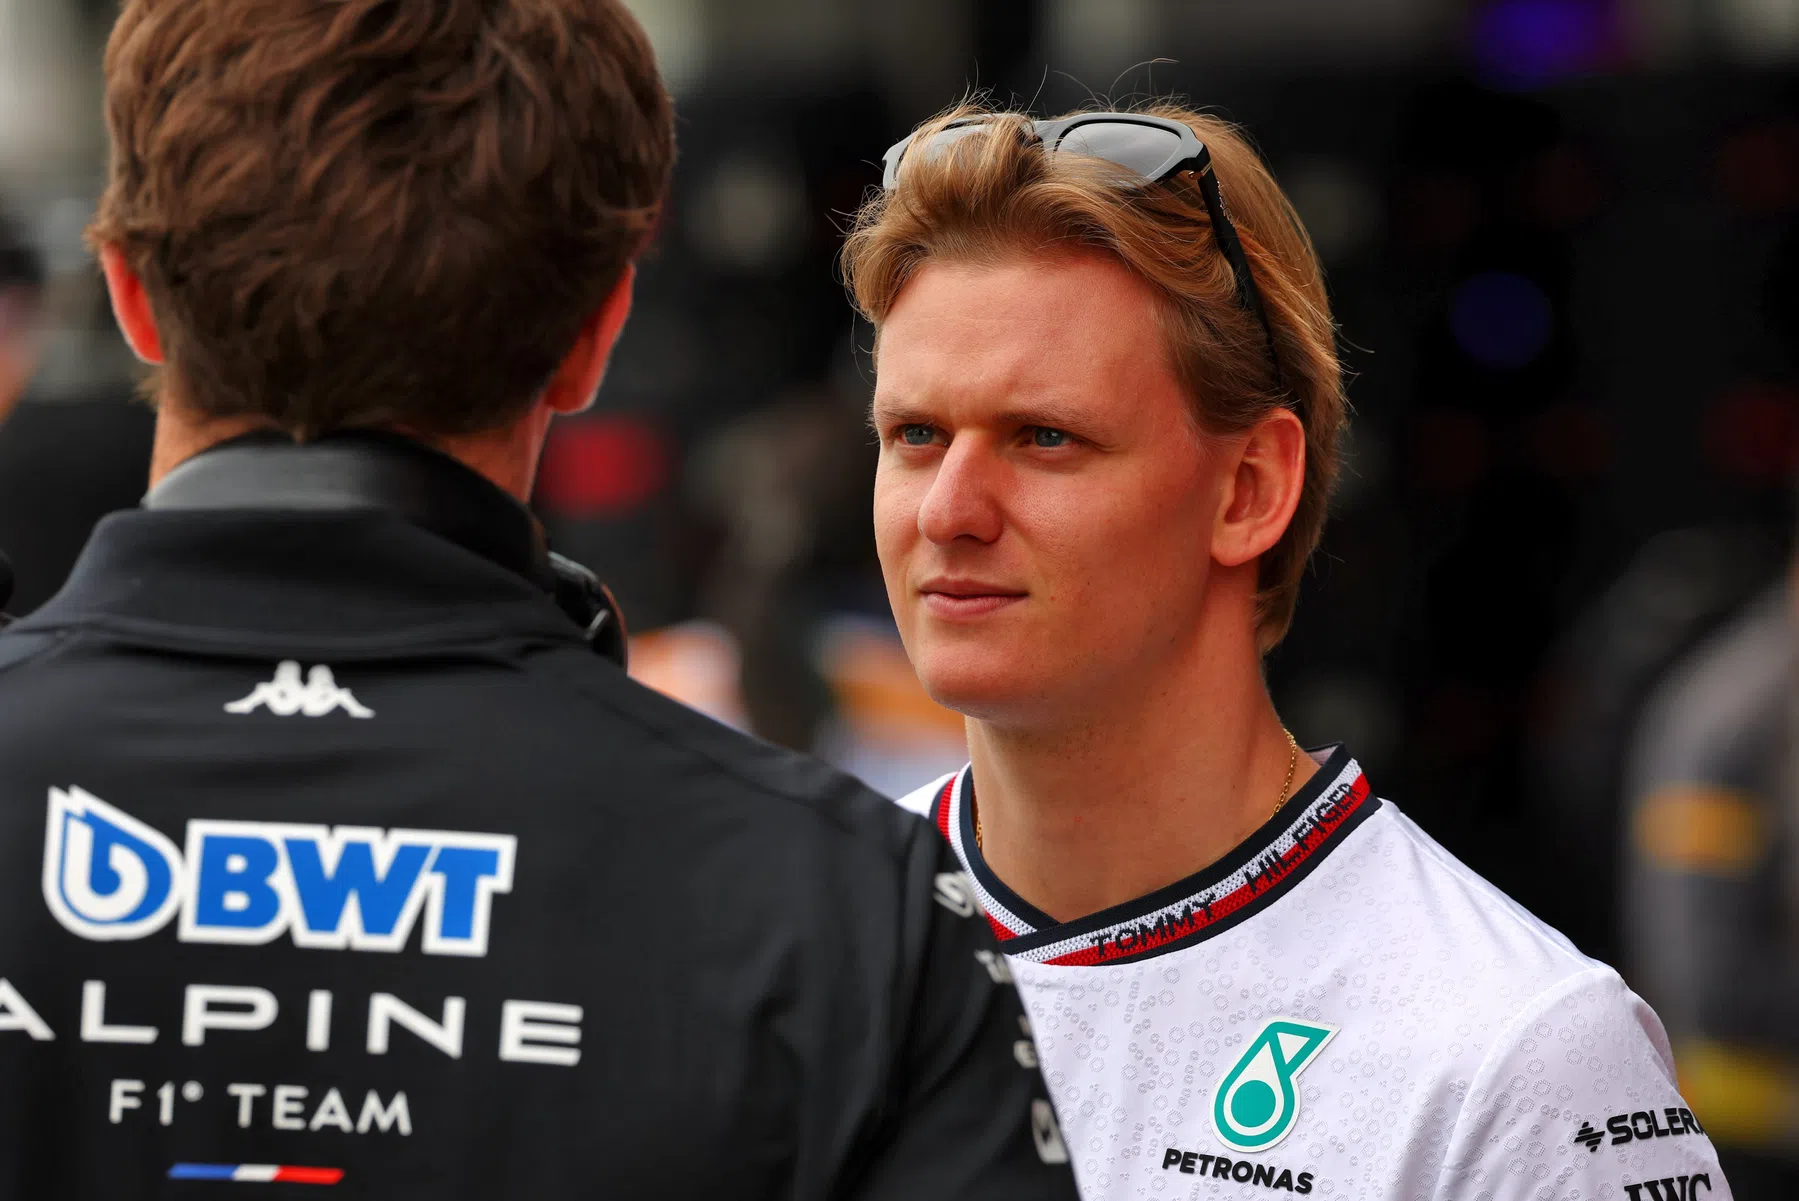 Bruno Famin on Mick Schumacher at Alpine F1